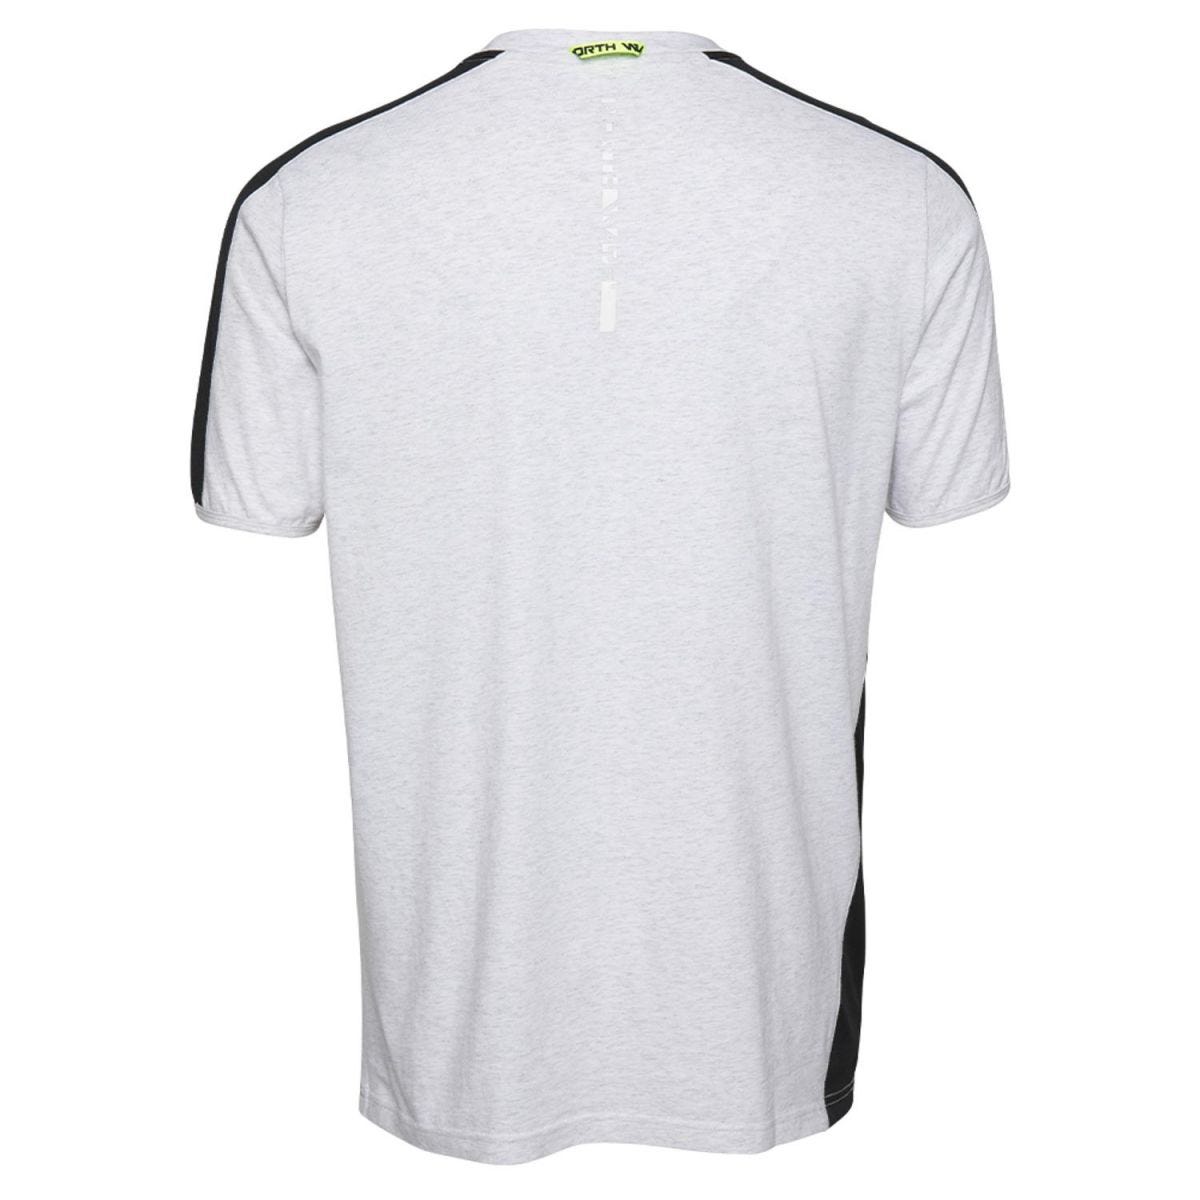 Tee-shirt à manches courtes pour homme Andy blanc chiné - North Ways - Taille L 1